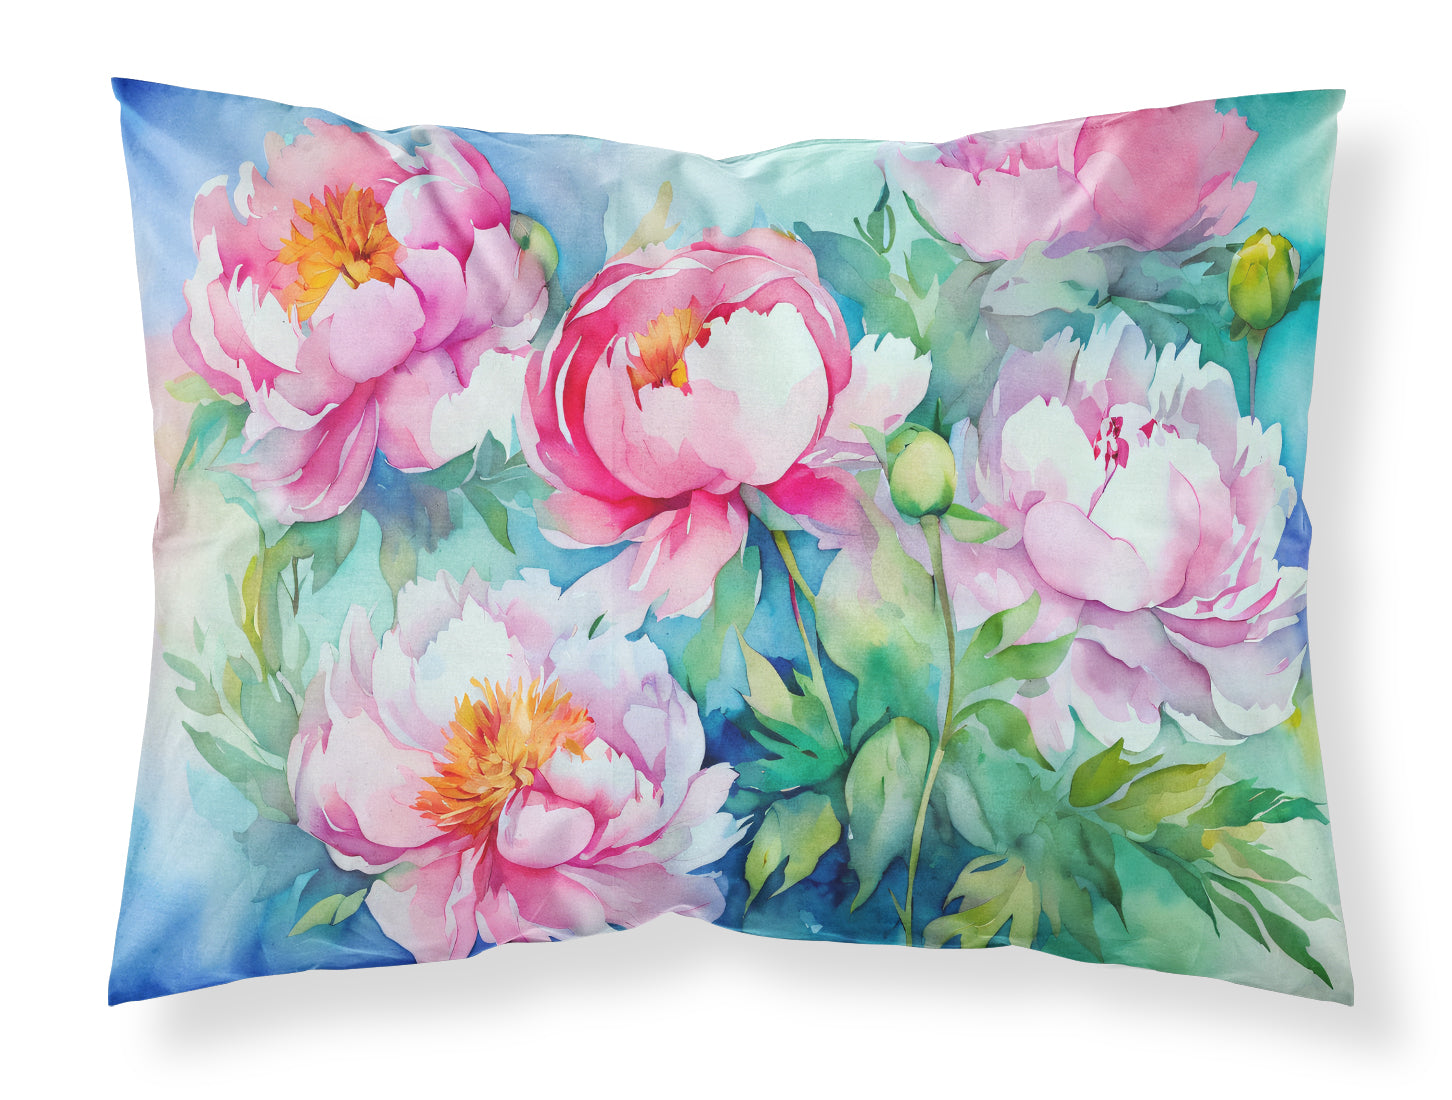 Buy this Peonies in Watercolor Fabric Standard Pillowcase